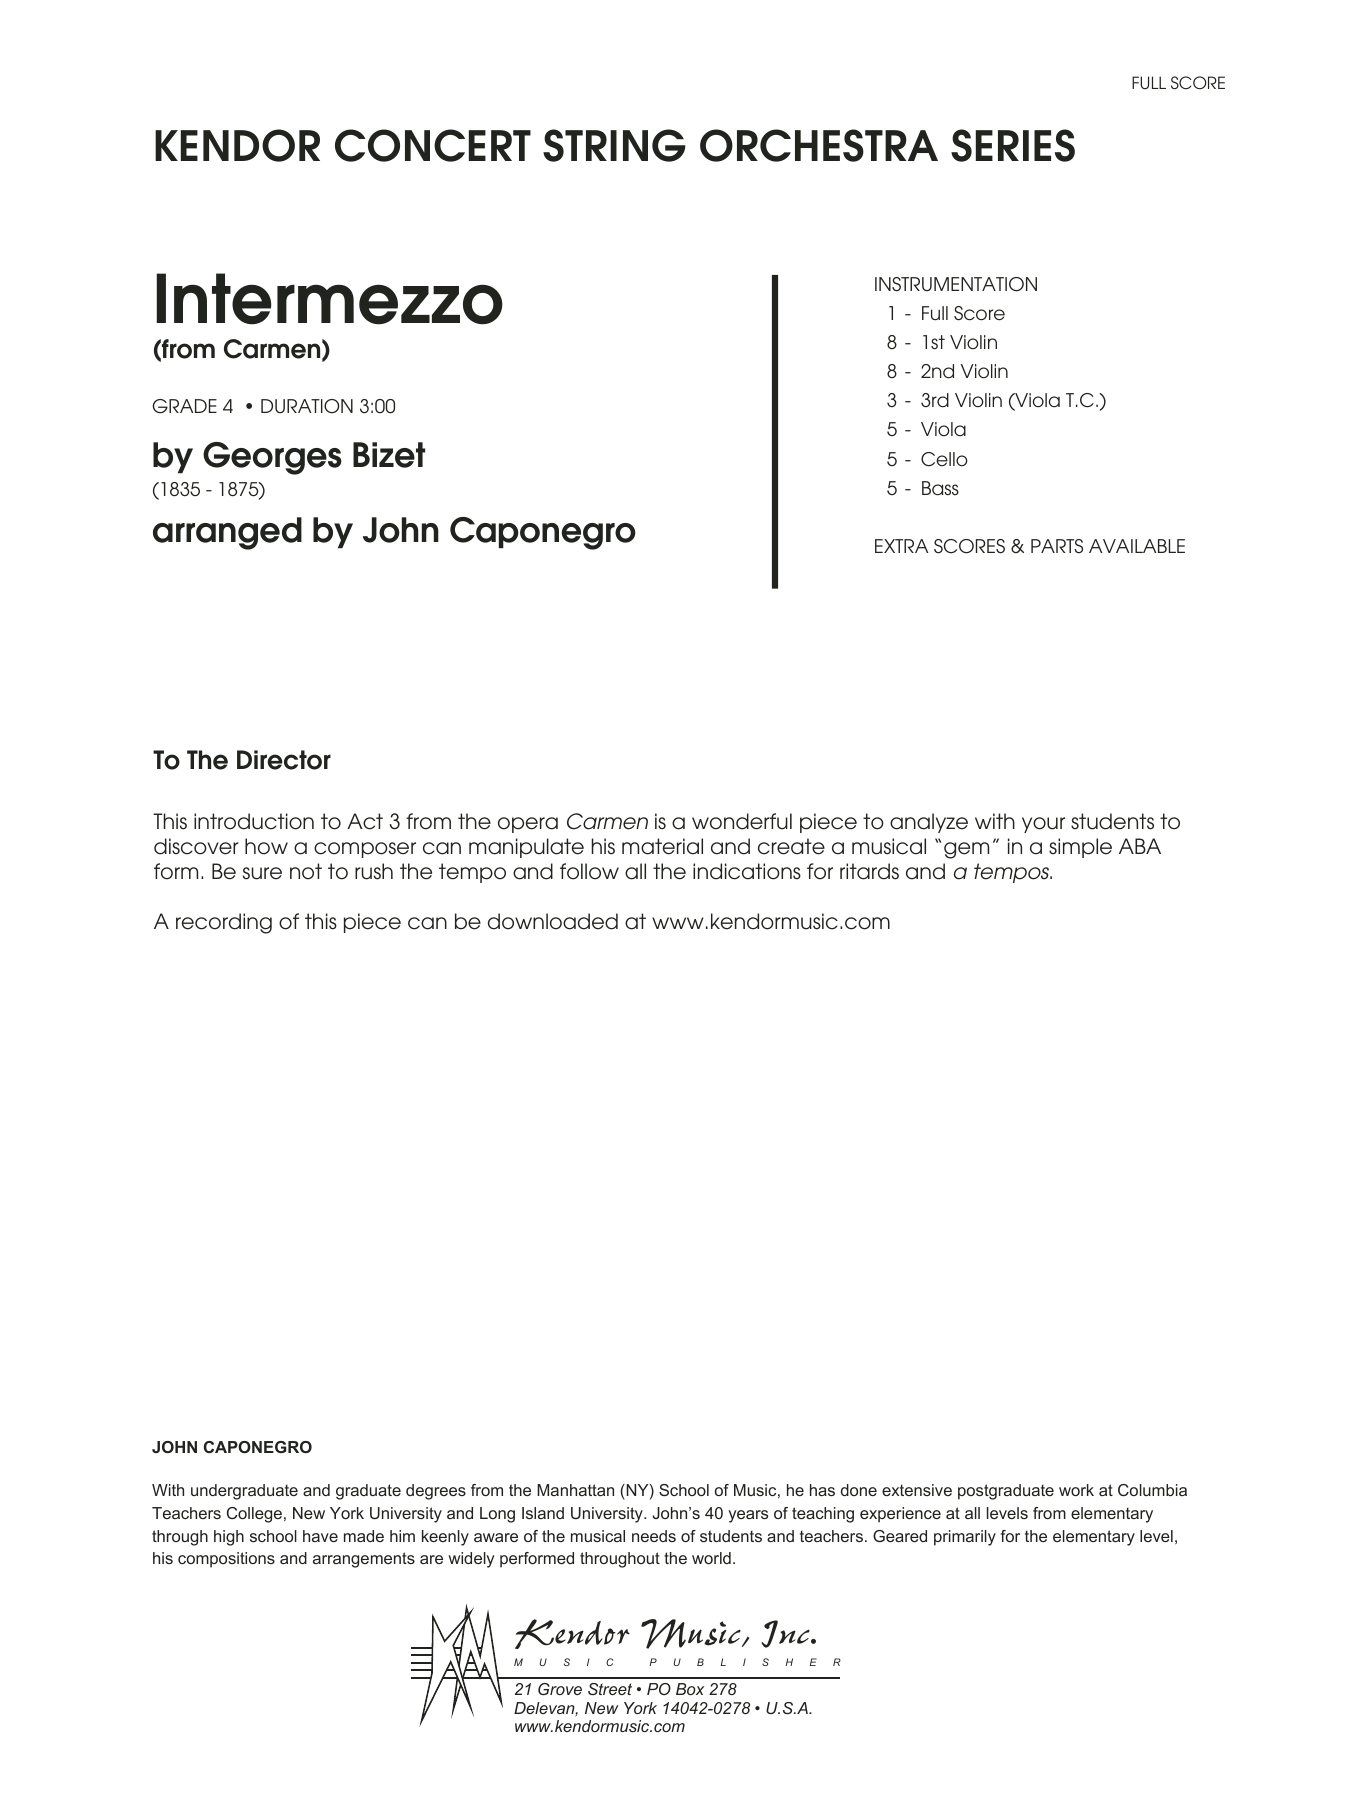 Download Caponegro Intermezzo (from Carmen) - Full Score Sheet Music